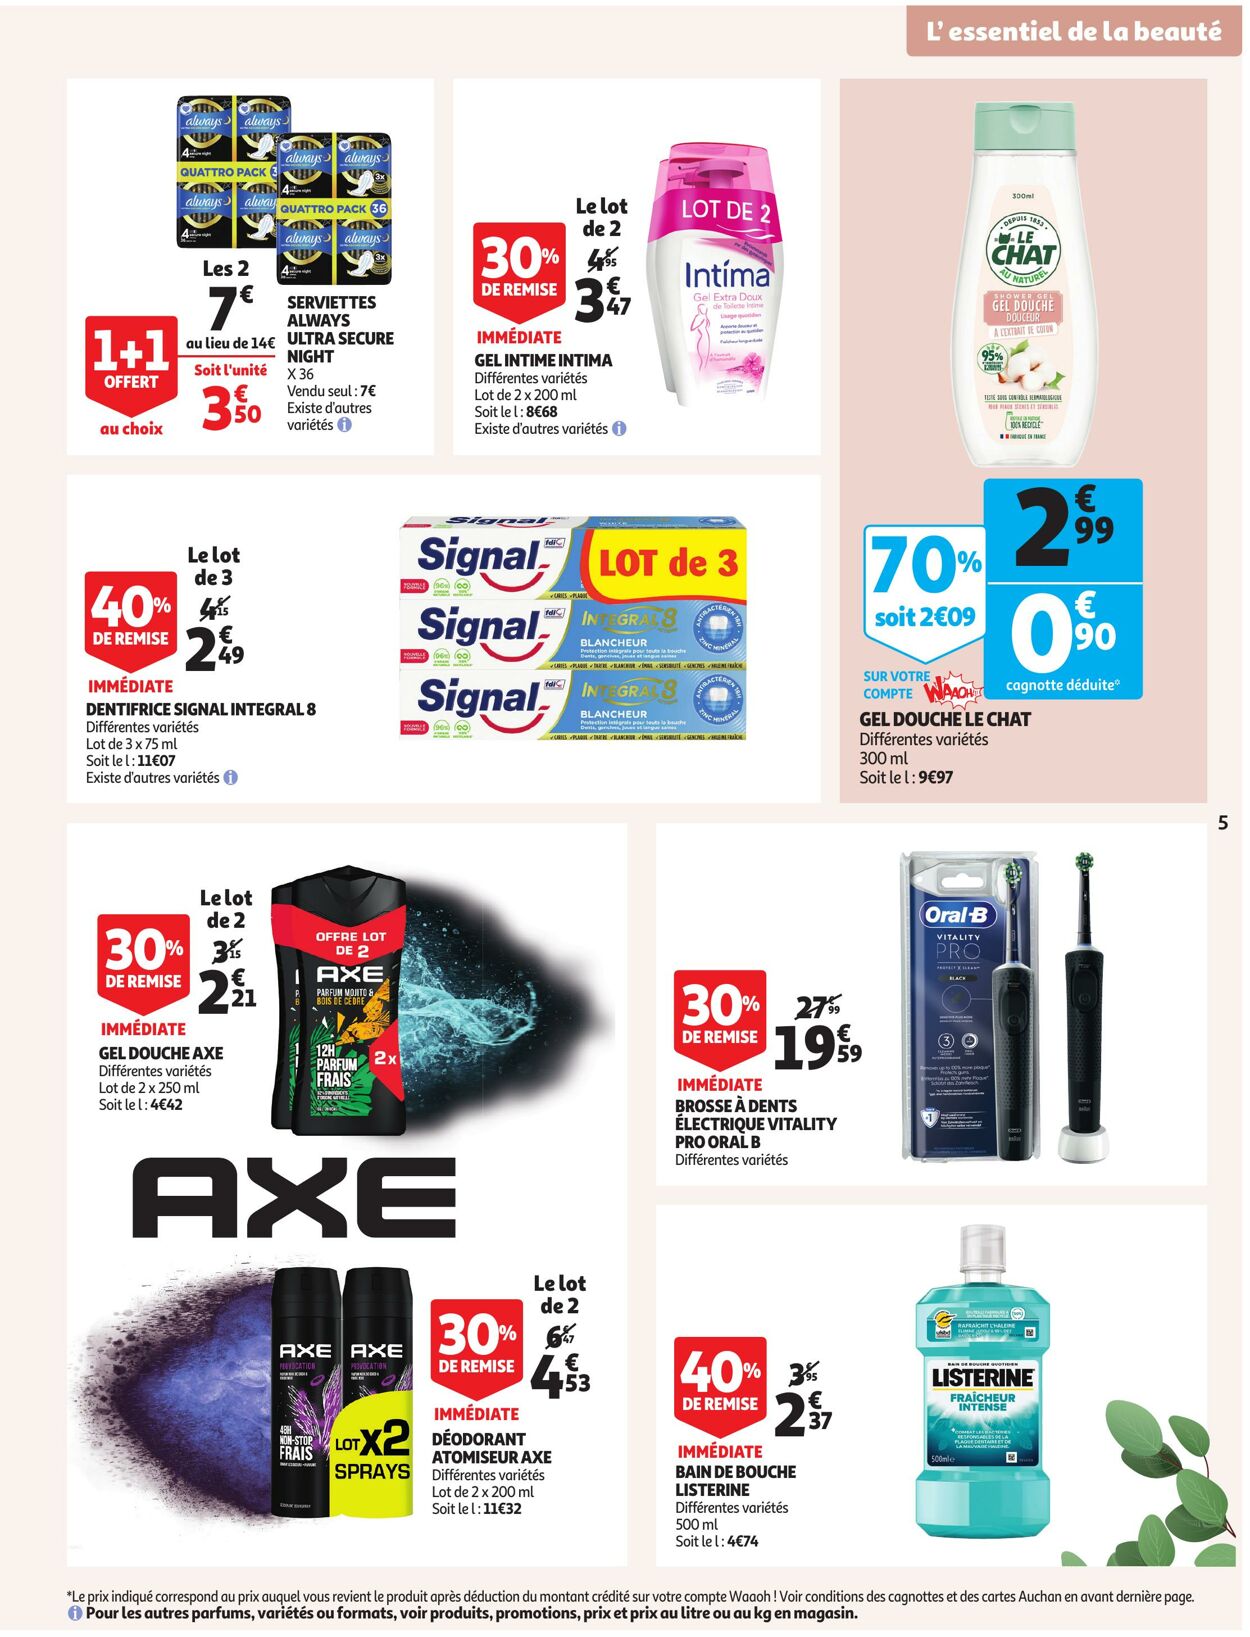 Catalogue Auchan 14.09.2022 - 20.09.2022